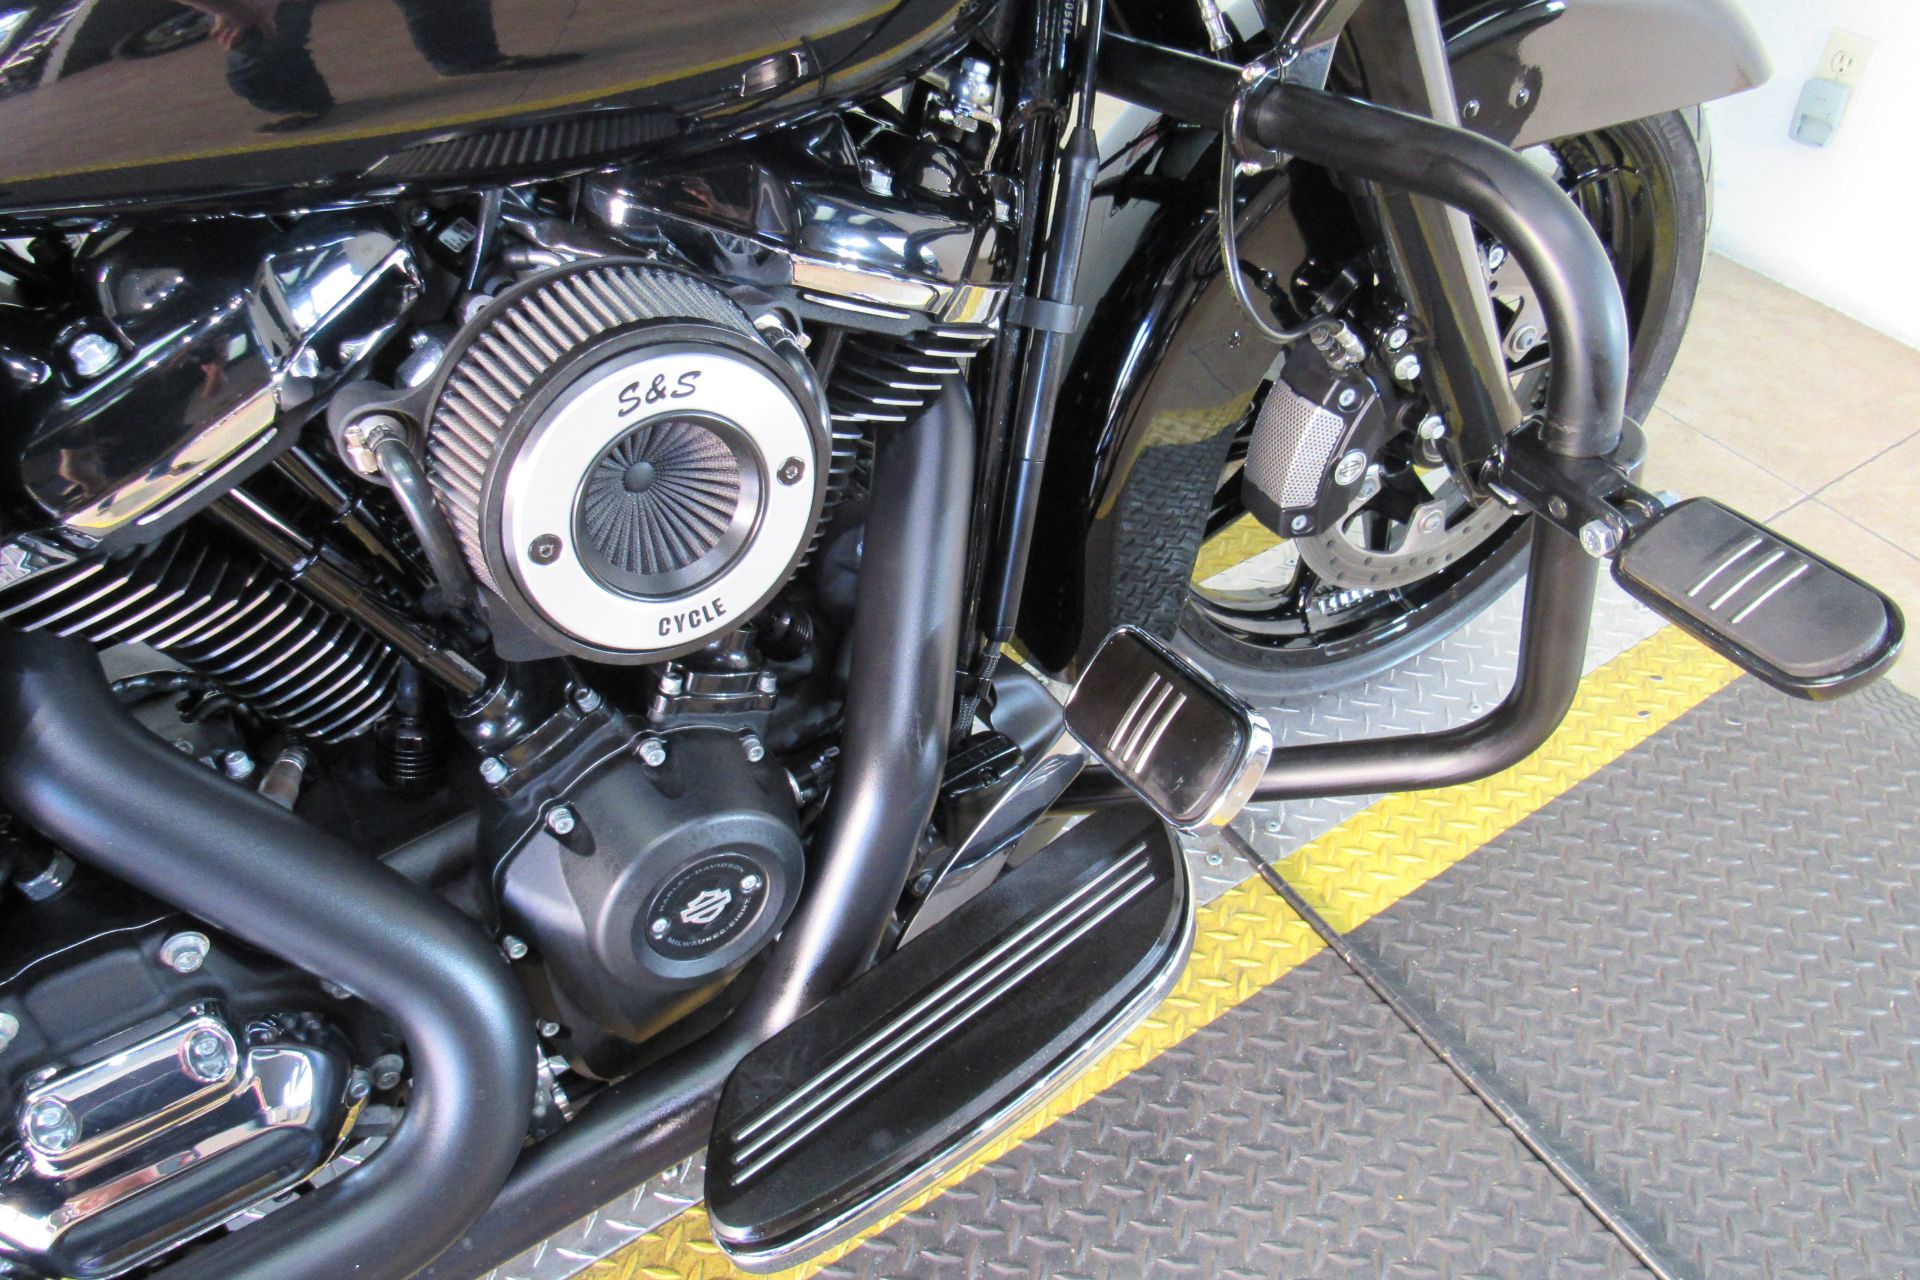 2021 Harley-Davidson Road Glide® in Temecula, California - Photo 17